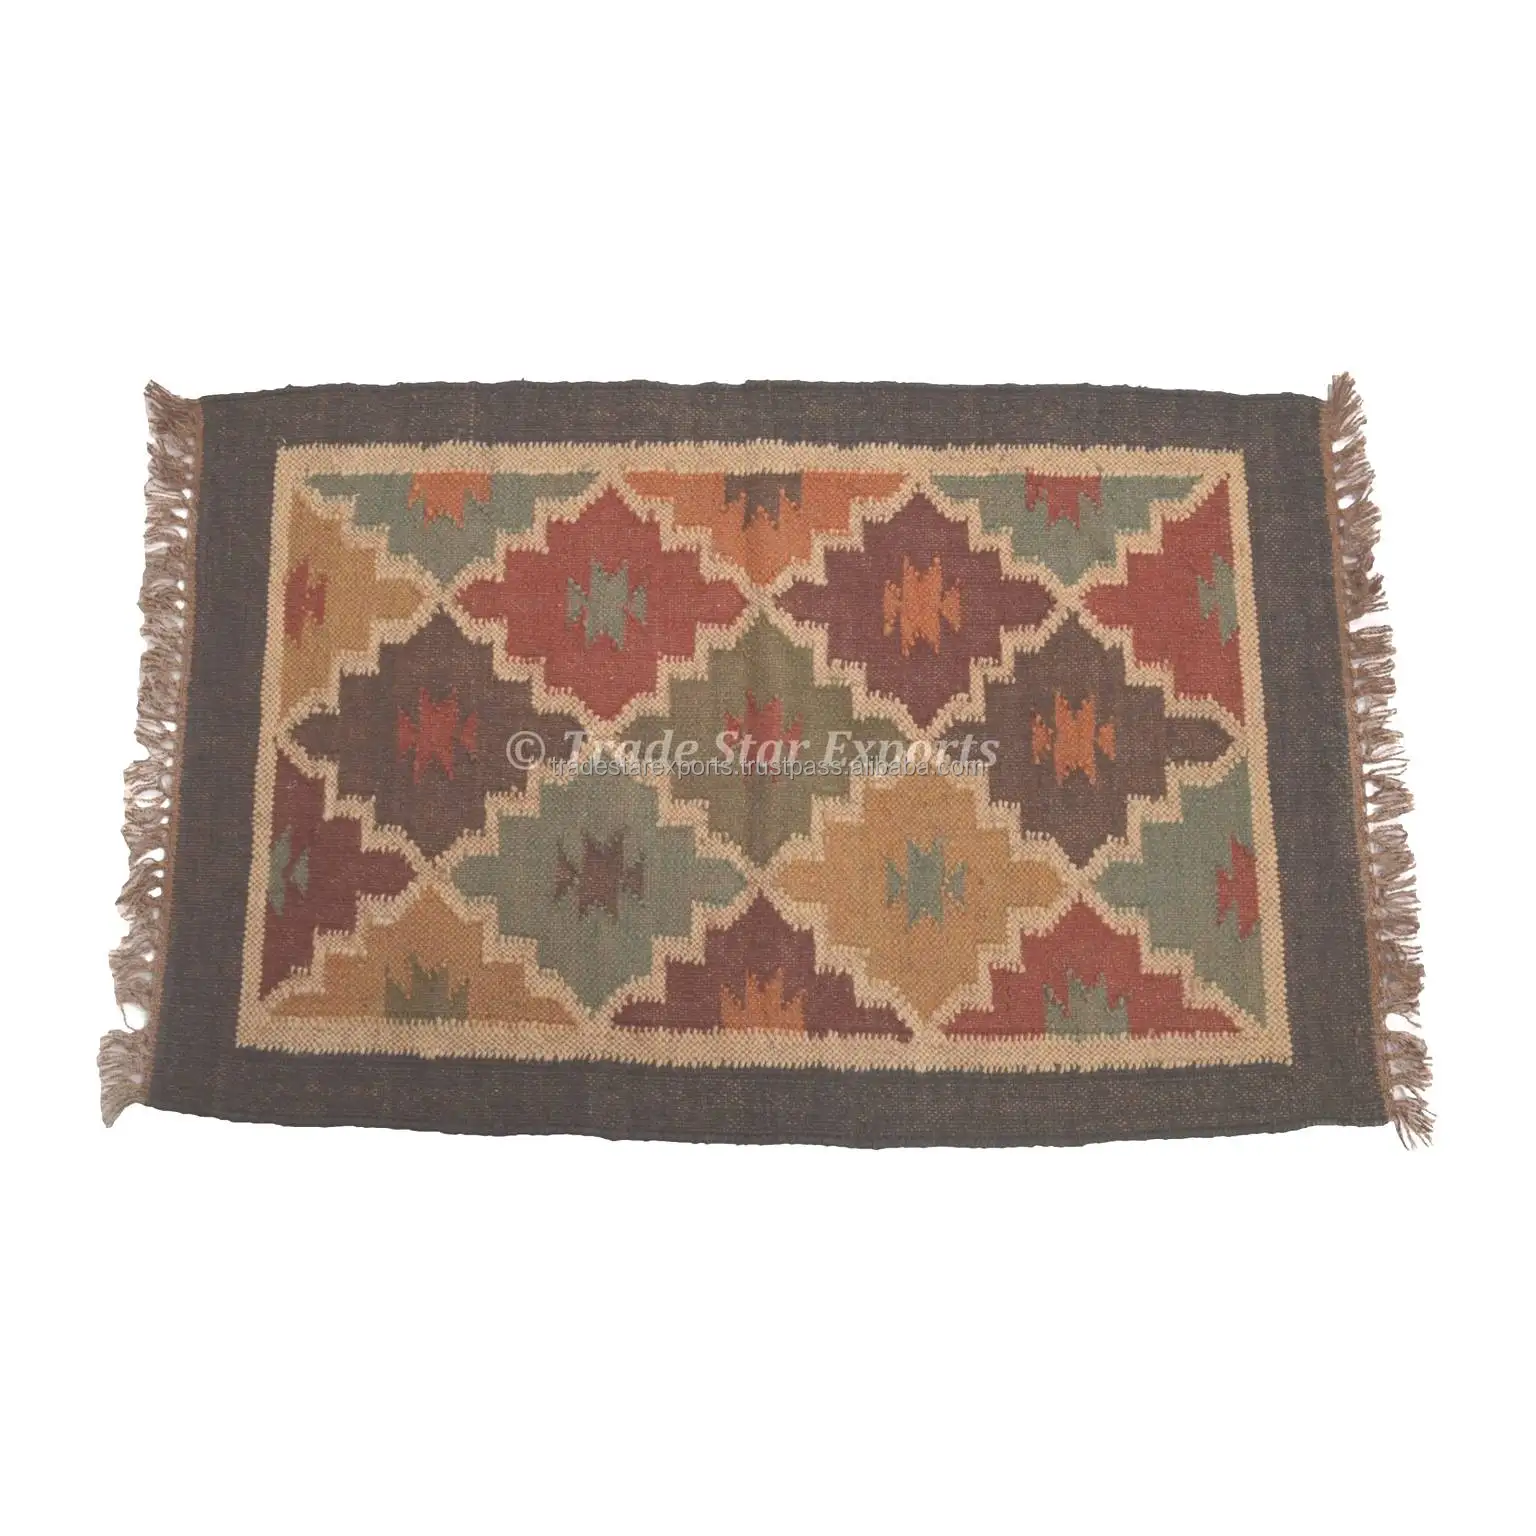 Details about   Kilim Rug Indian Jute Wool Hand Knotted 2x3' ft Kilim Area Rug Floor Carpet Sham 